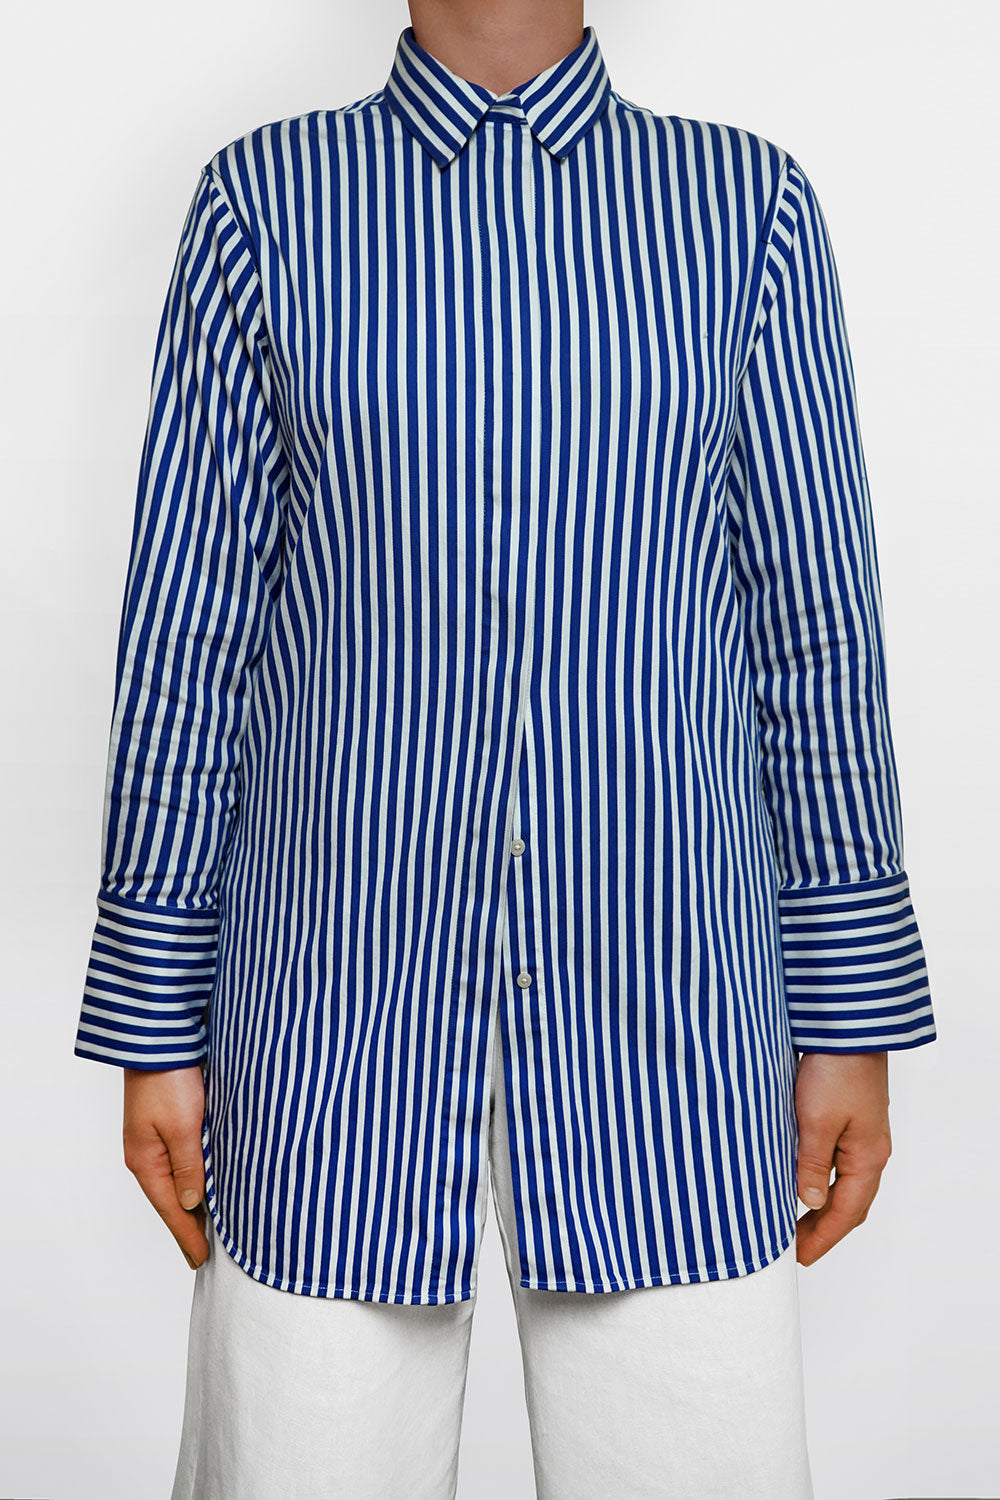 Malene Birger Pre-Owned Stripe Long Shirt Size S